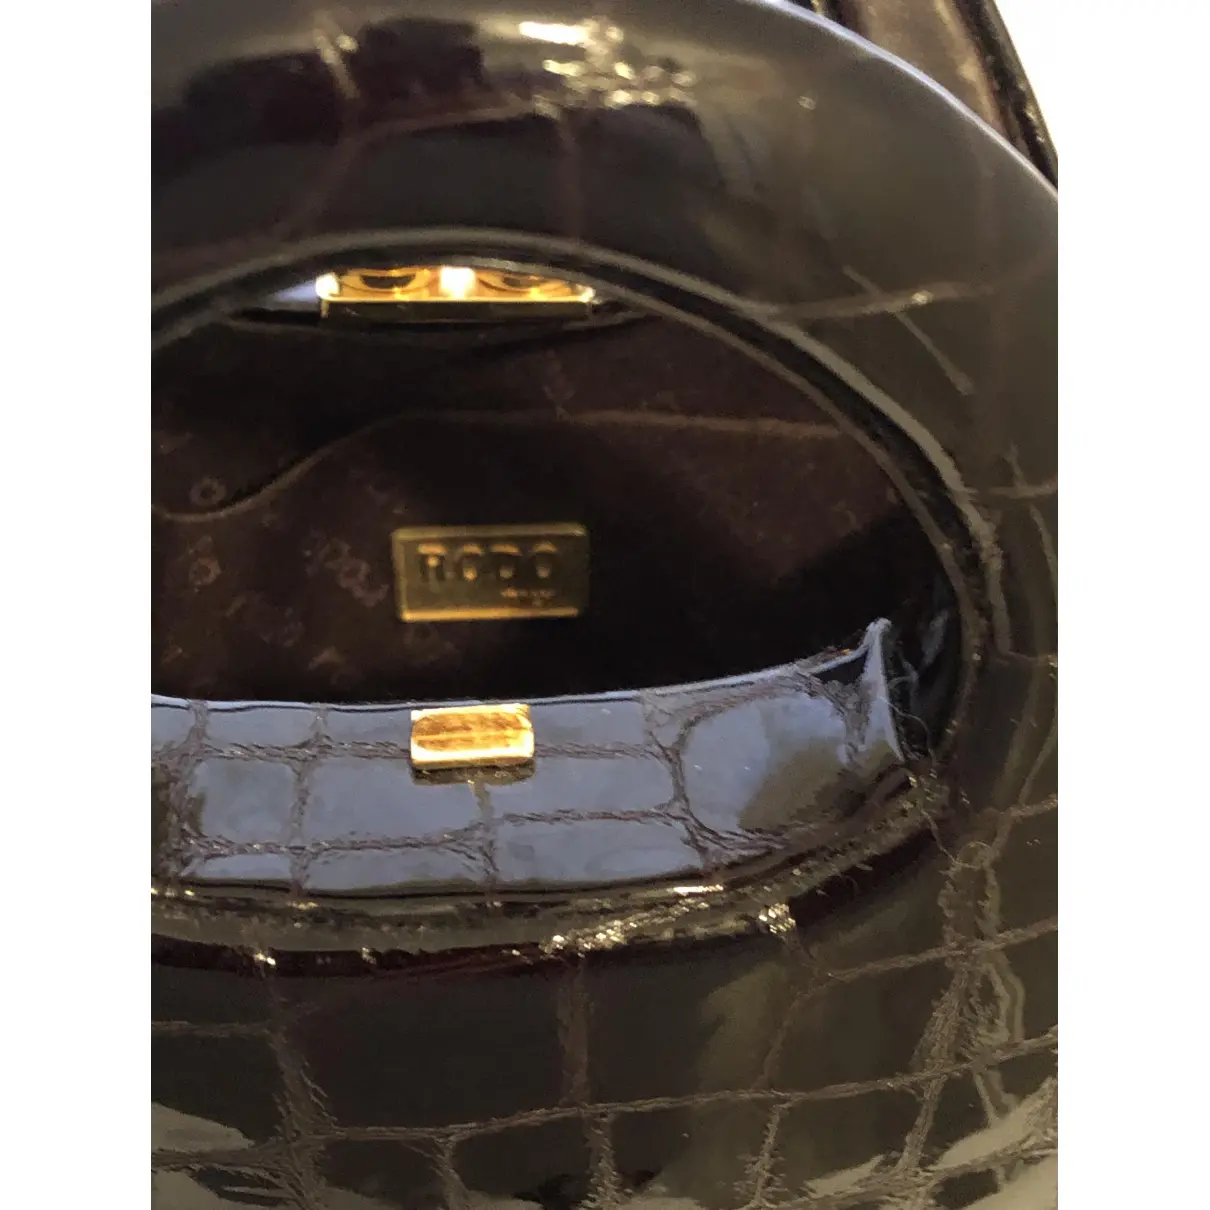 Leather handbag Rodo